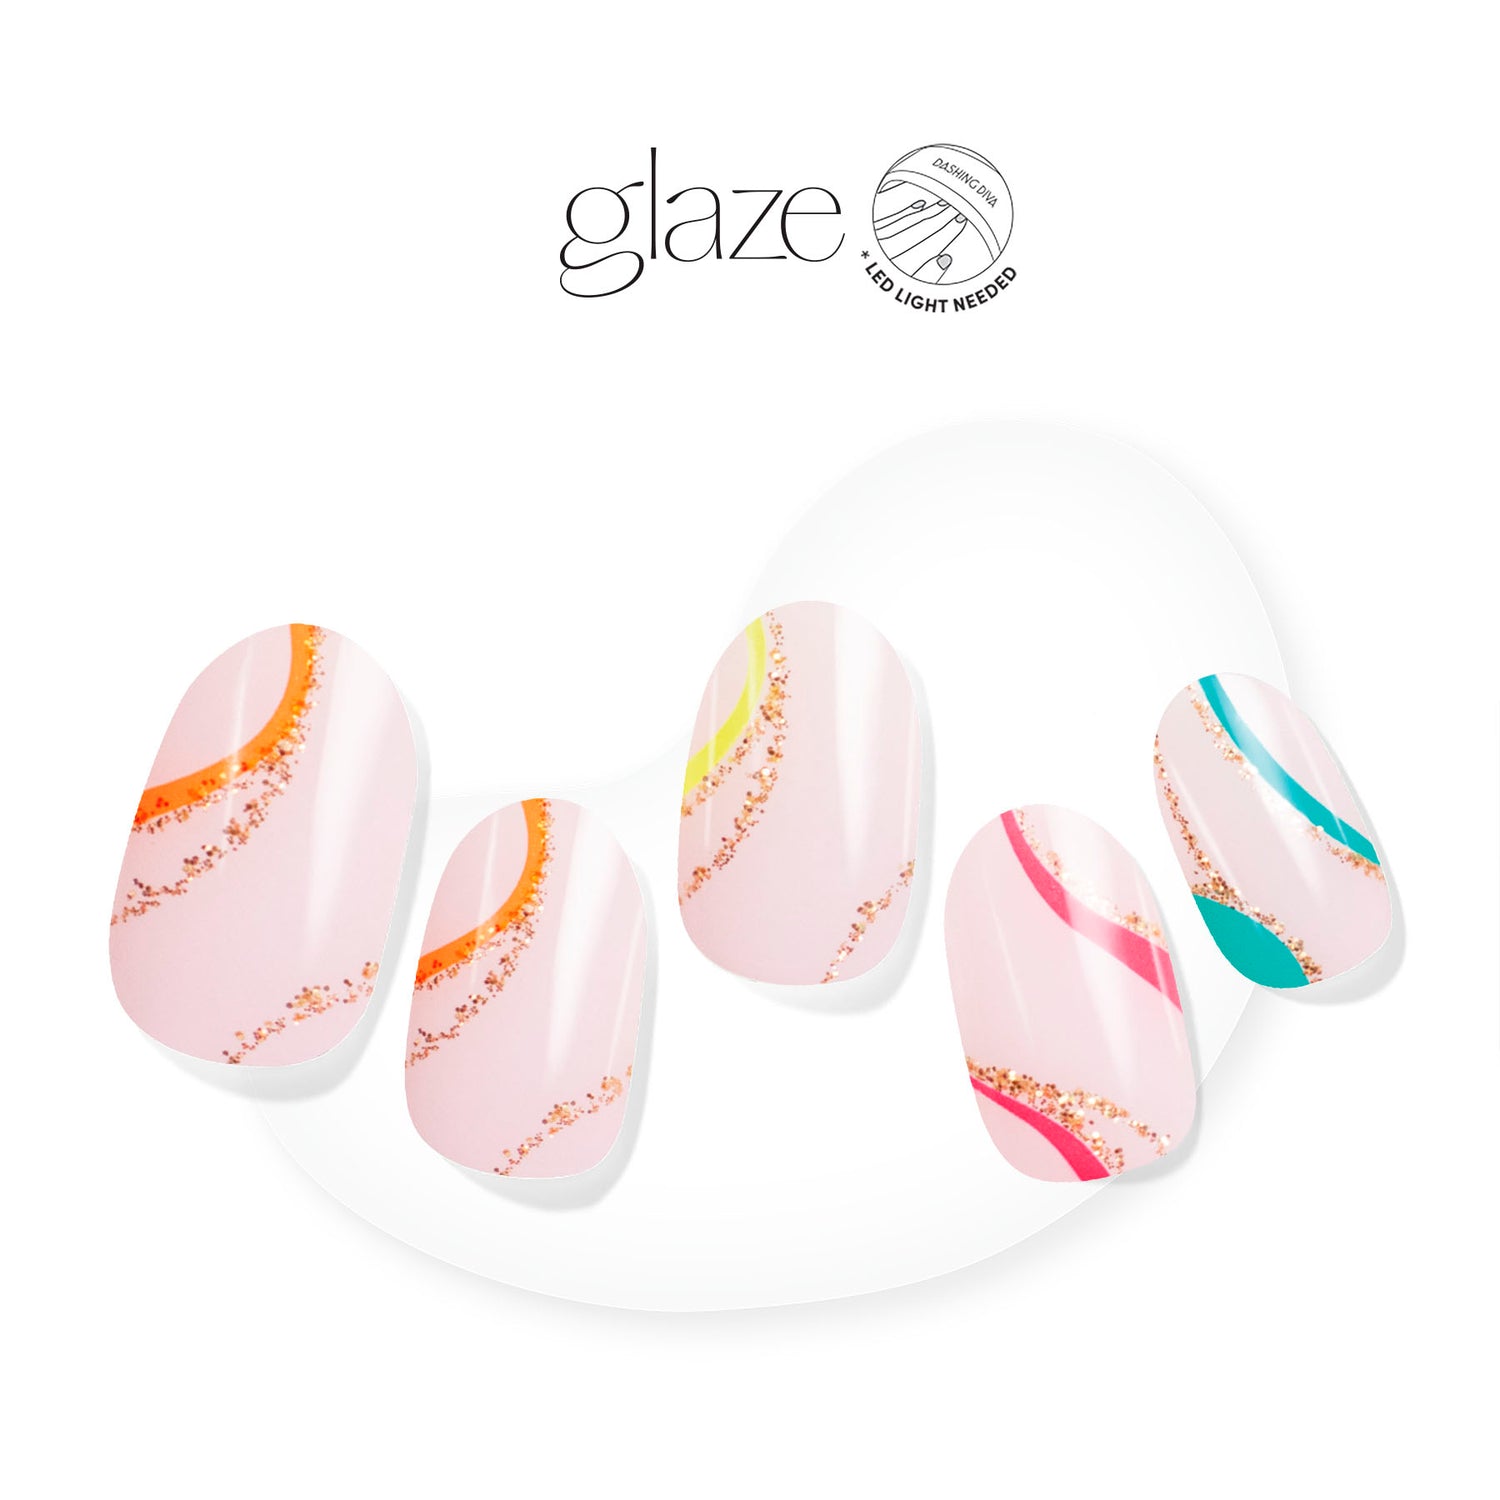 Swirl Glam Glitter Glue Stick Sets